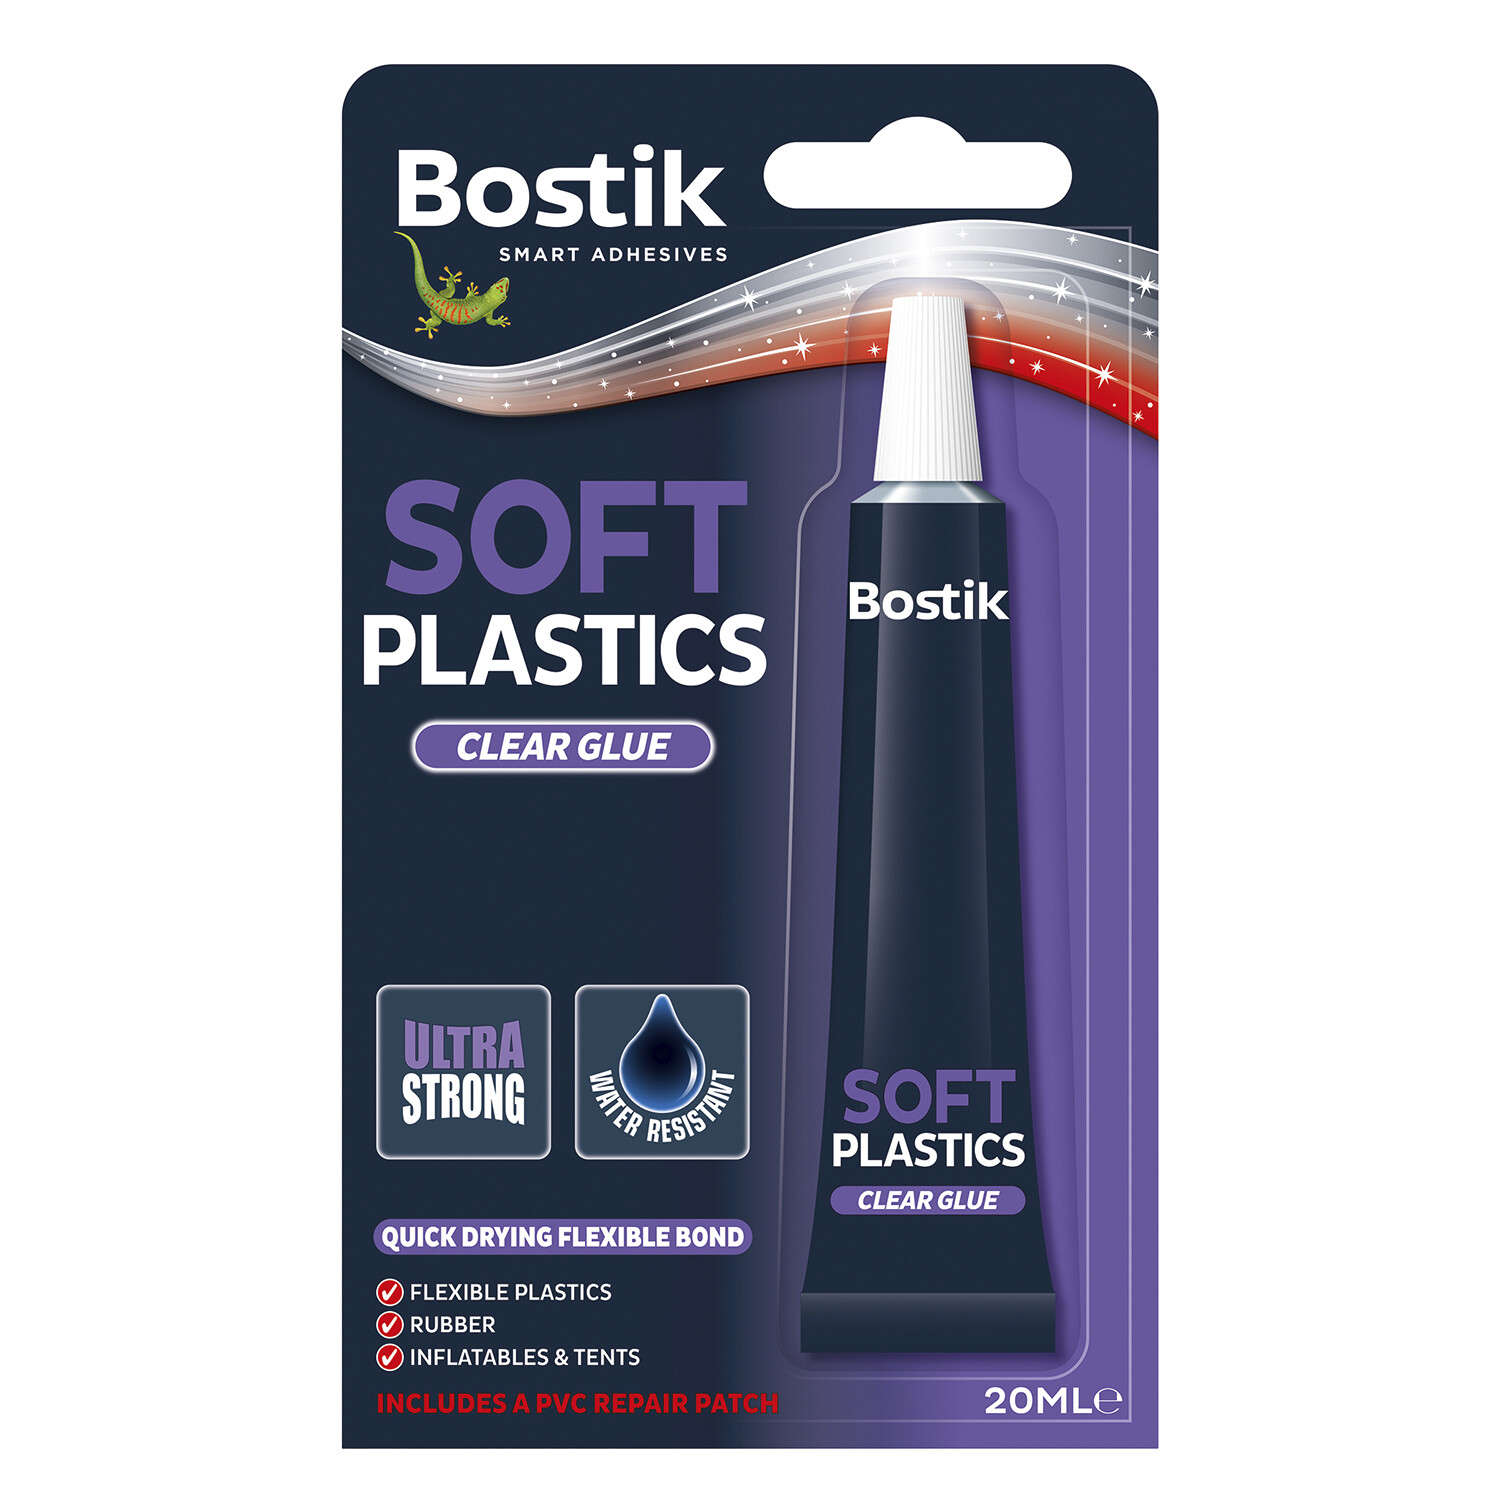 Bostik Soft Plastics Clear Glue 20ml Image